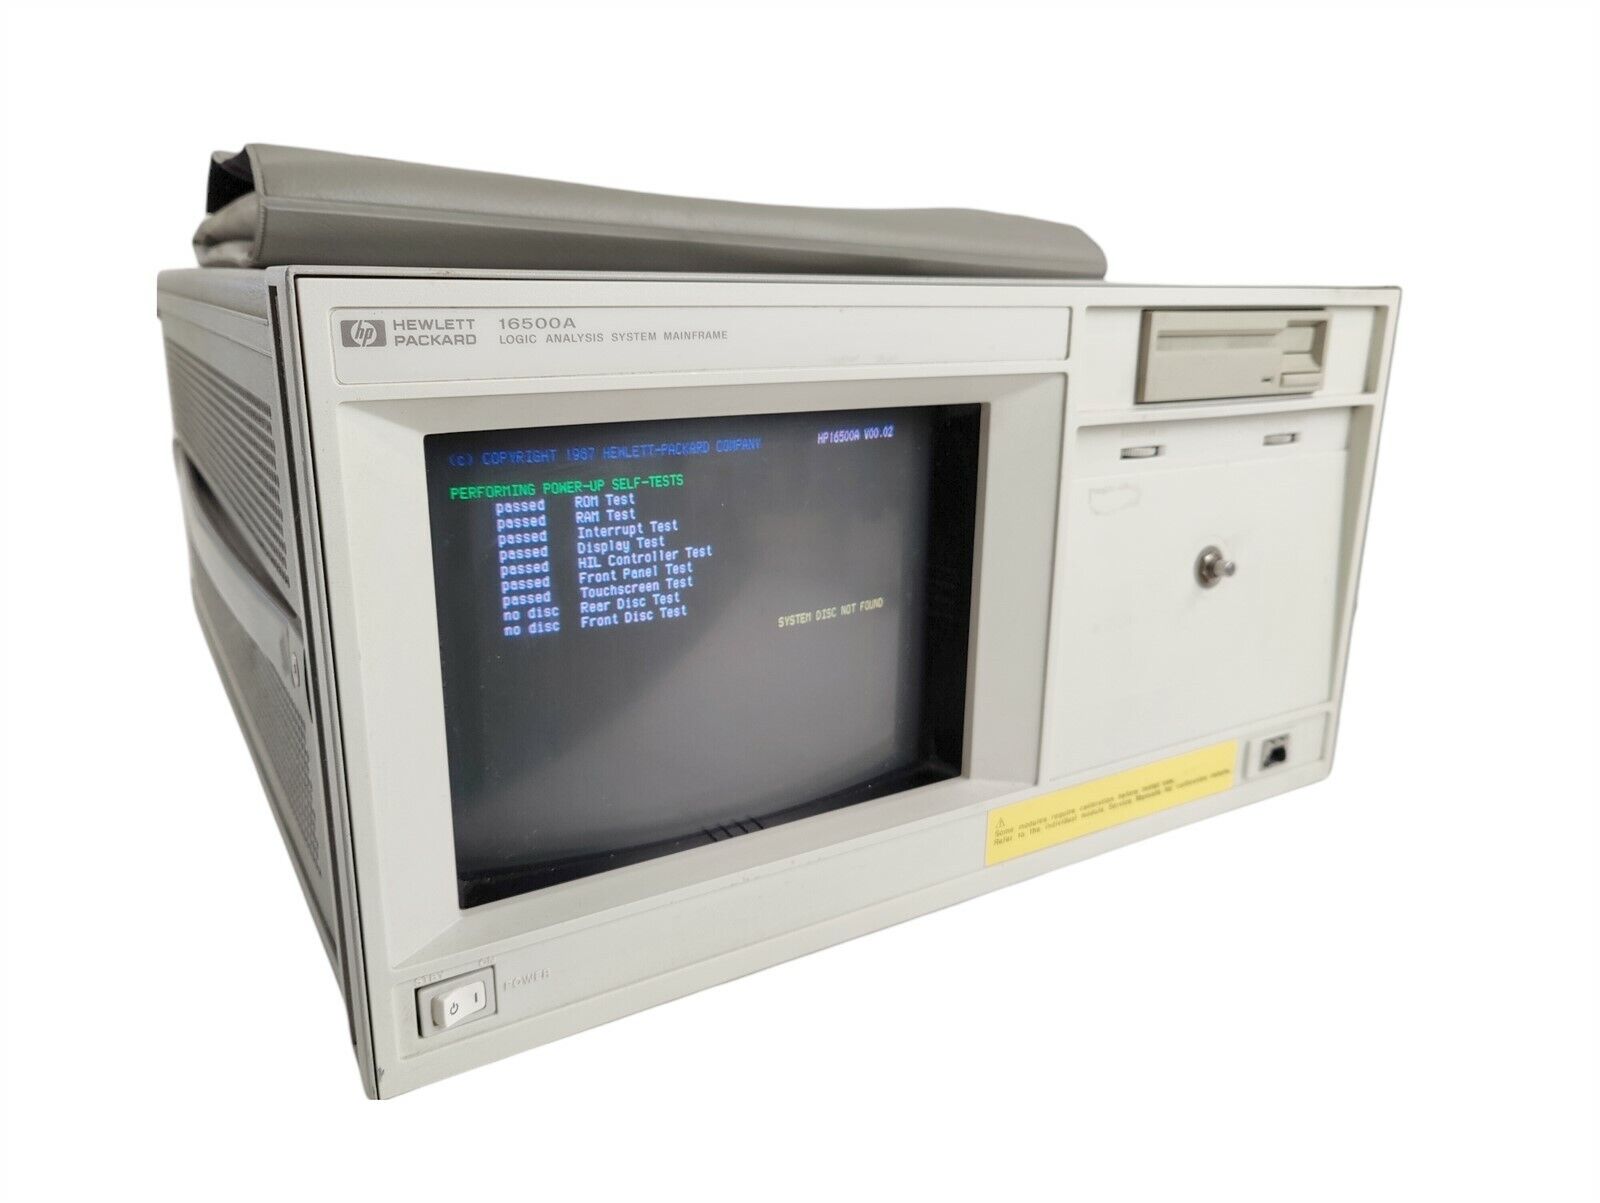 HP 16500A Logic Analysis Prototype Analyzer System 5 Slot Touchscreen Mainframe